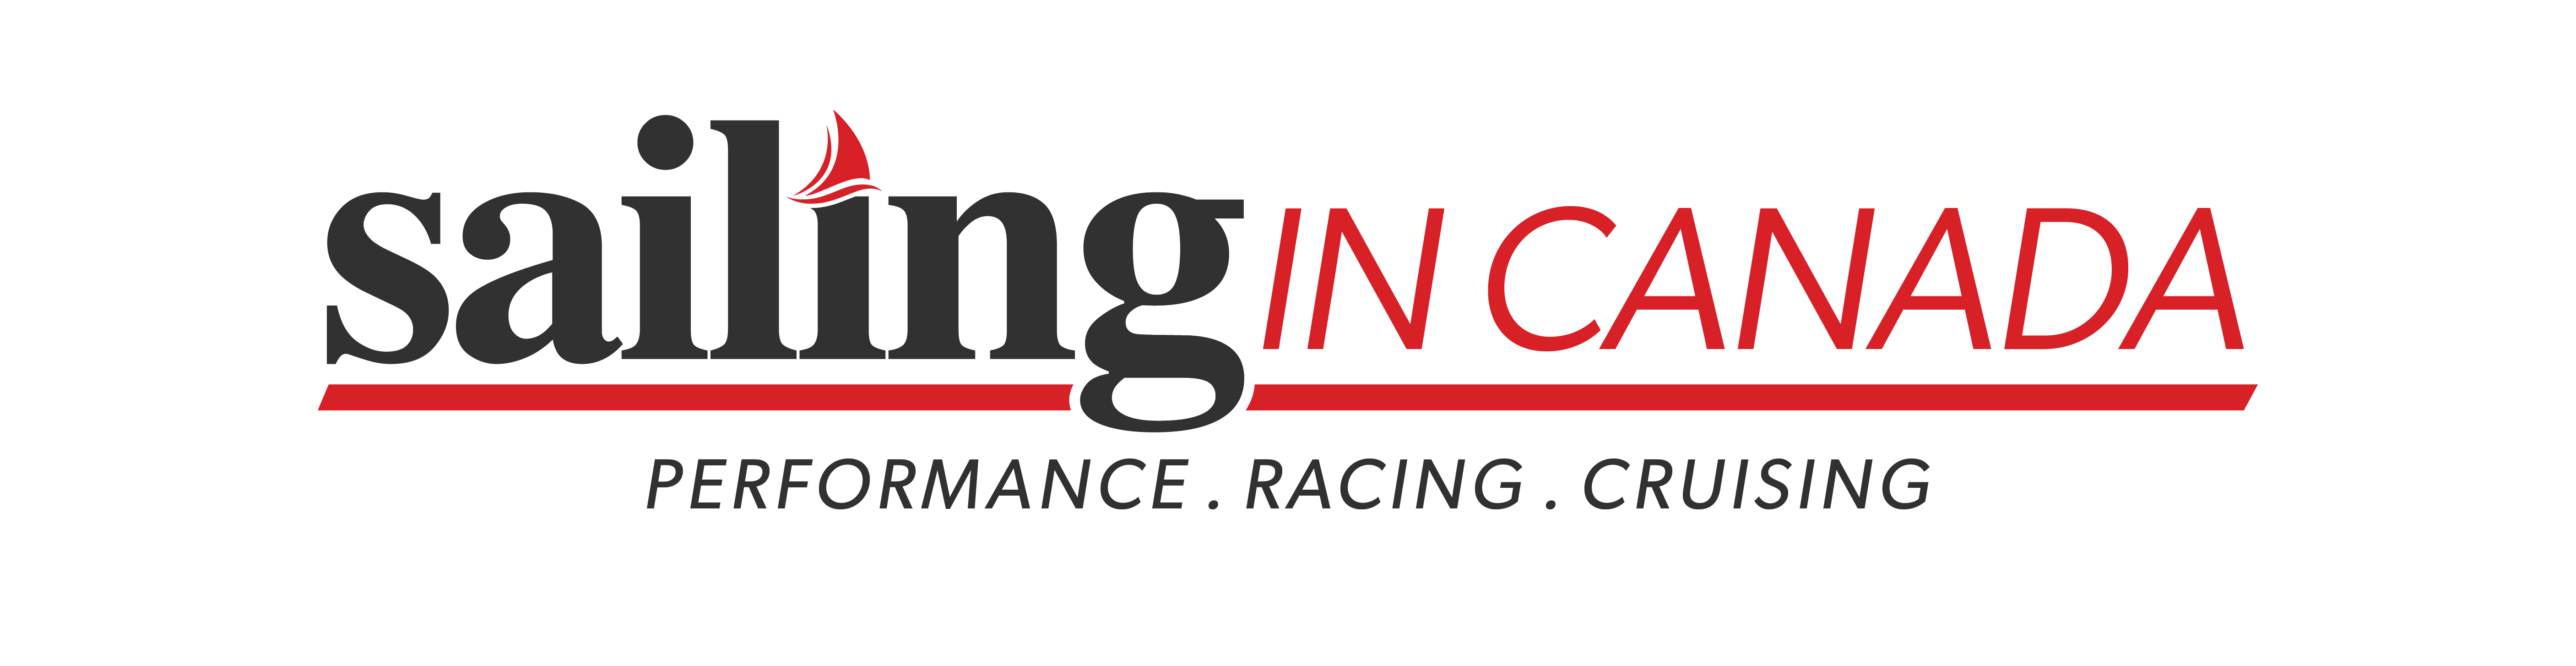 Sailing In Canada logo